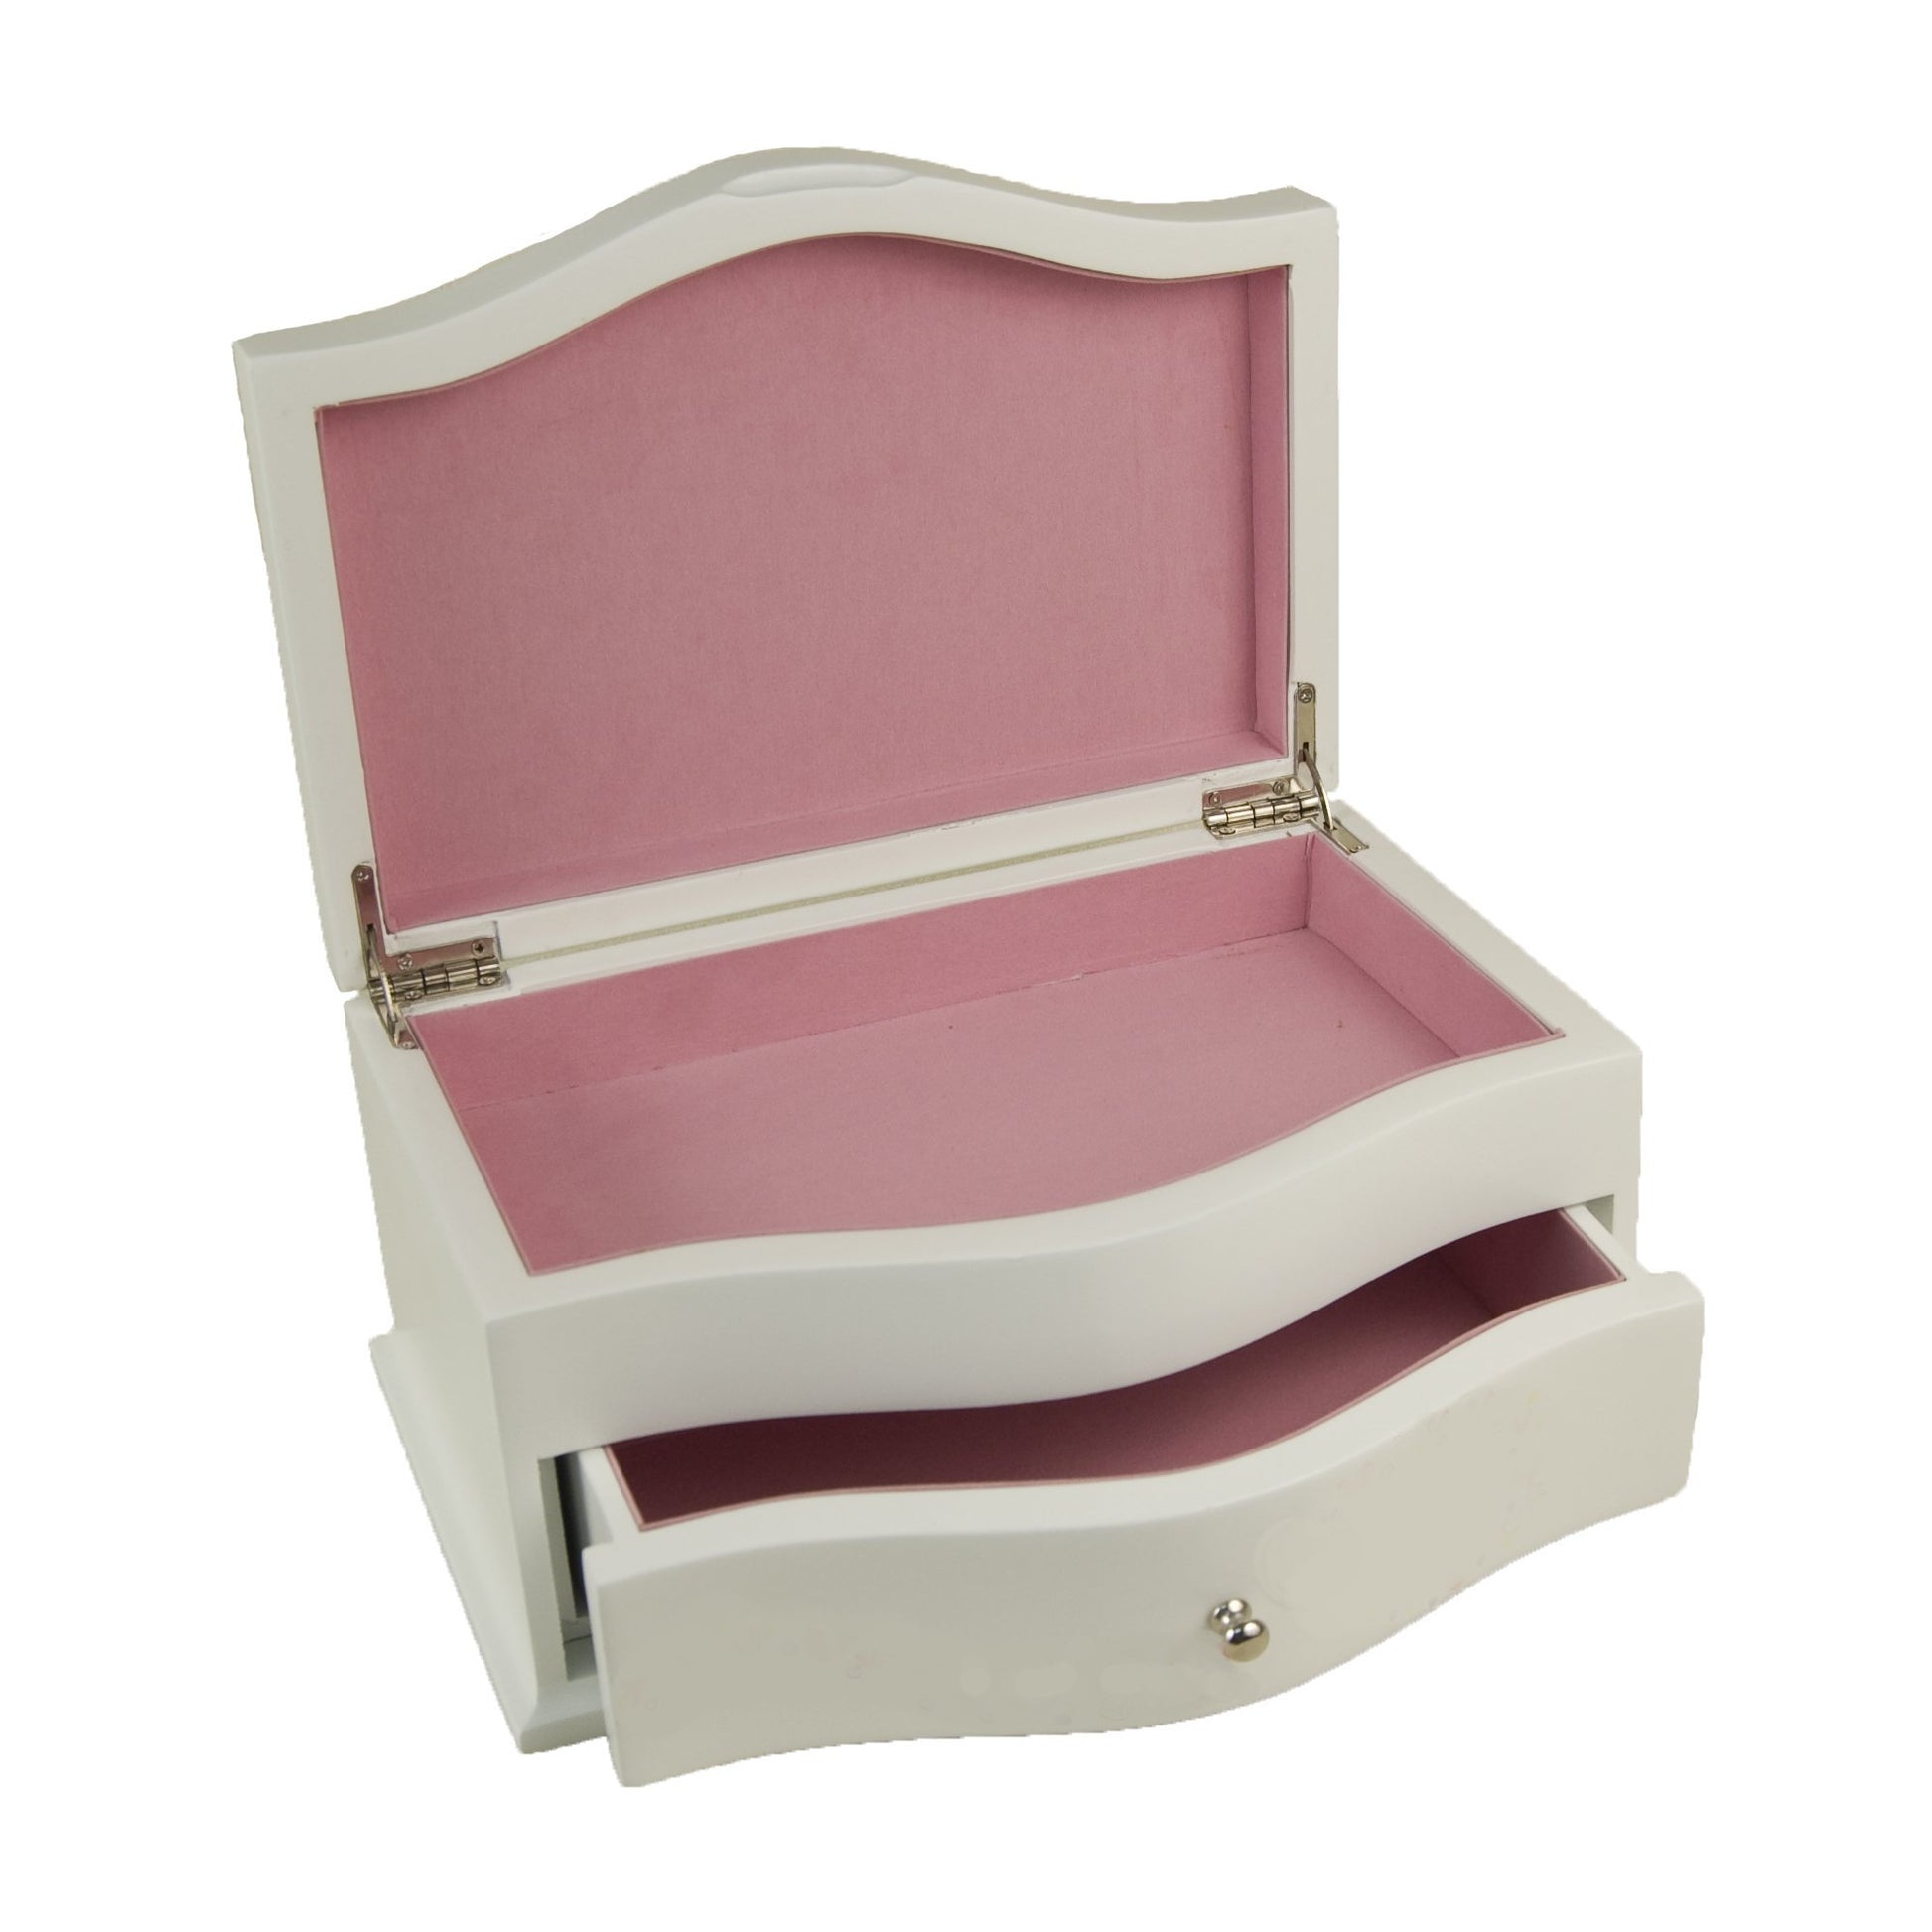 Princess Girls Jewelry Box with Golf design